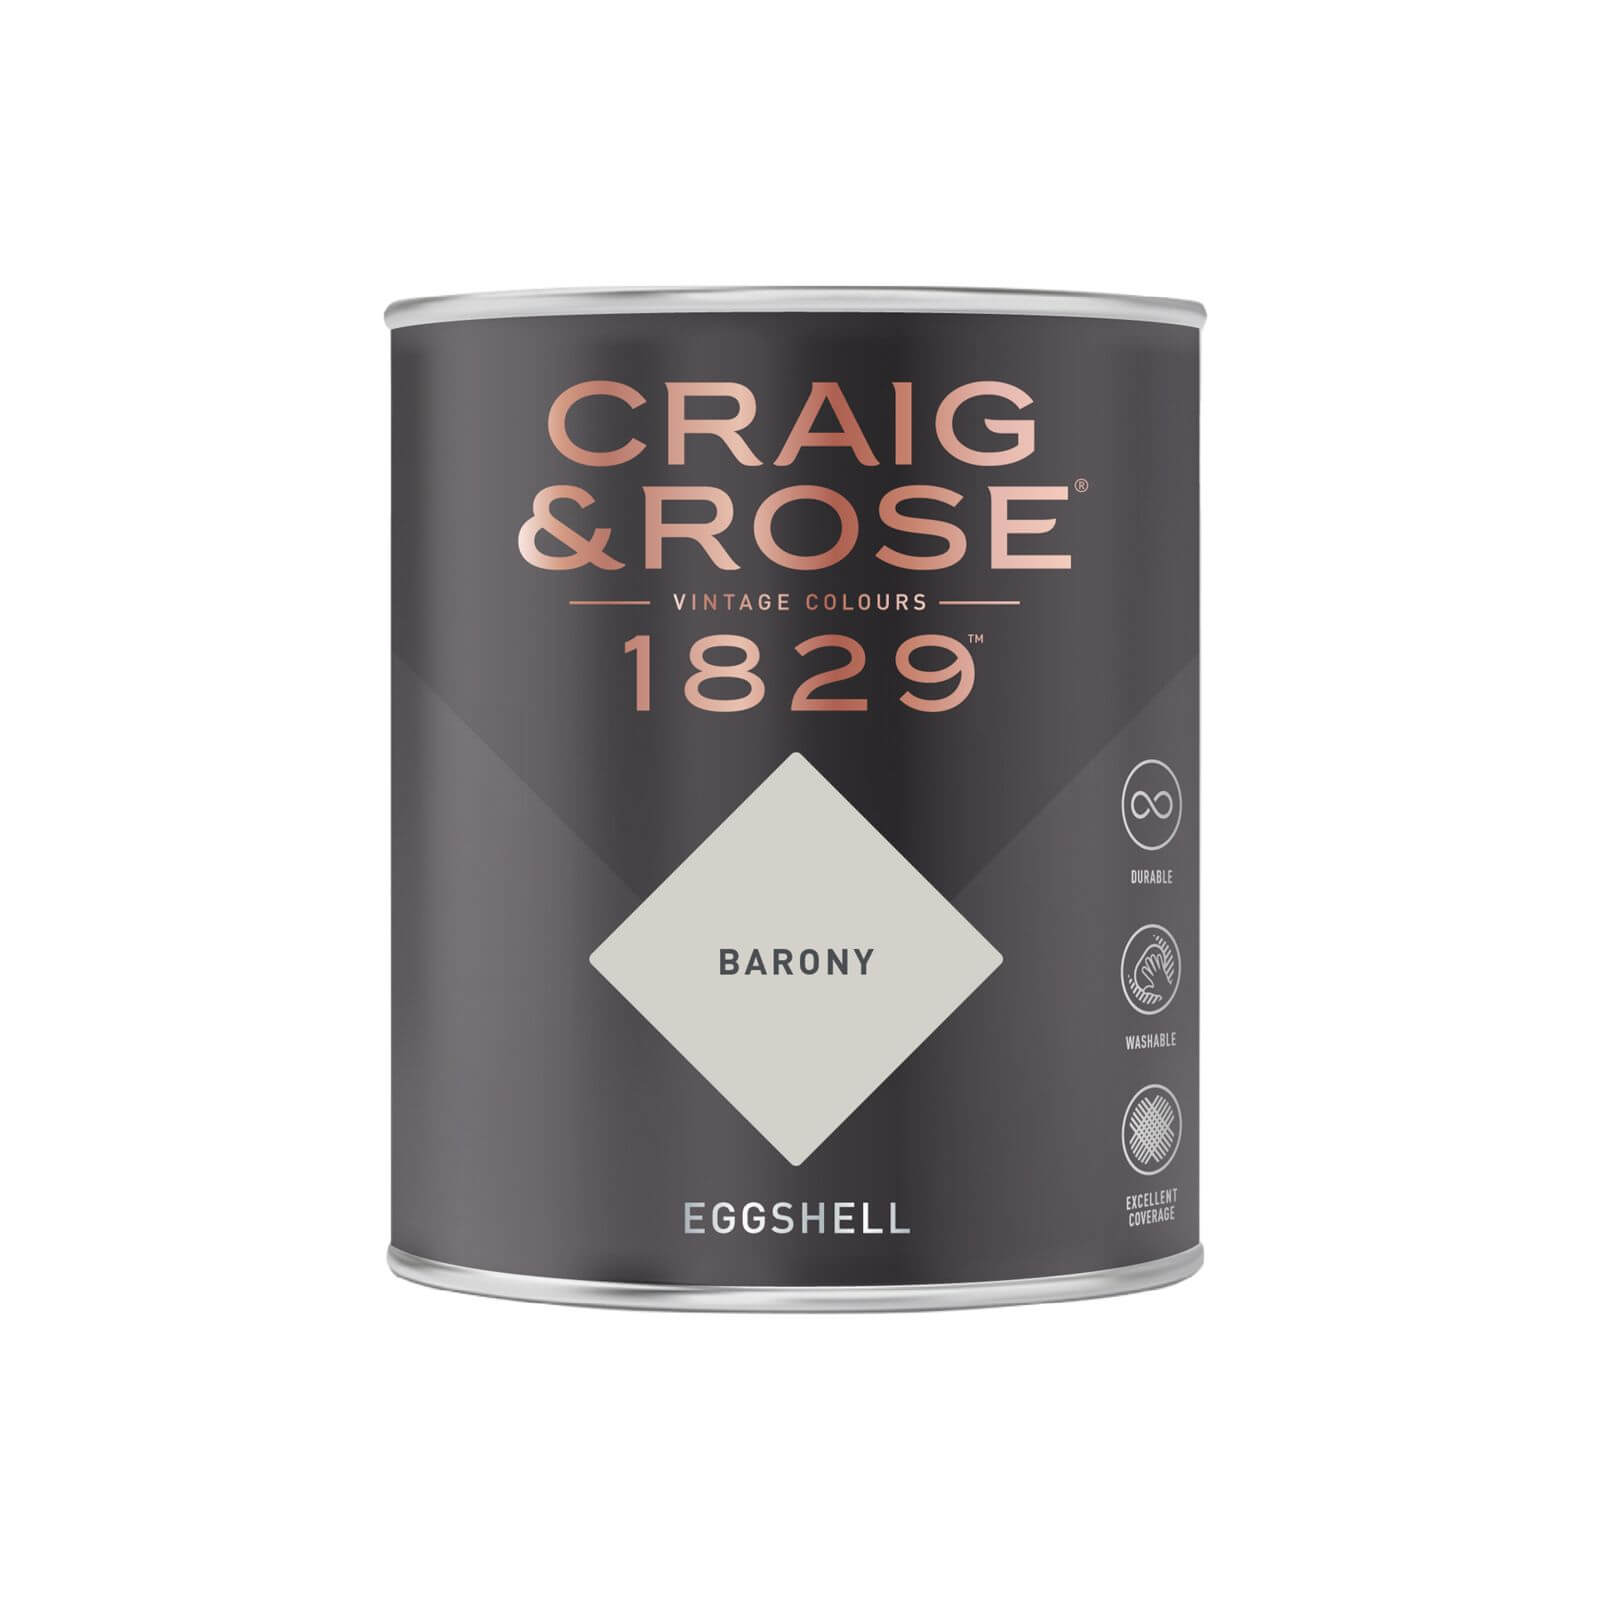 Craig & Rose 1829 Eggshell Paint Barony - 750ml